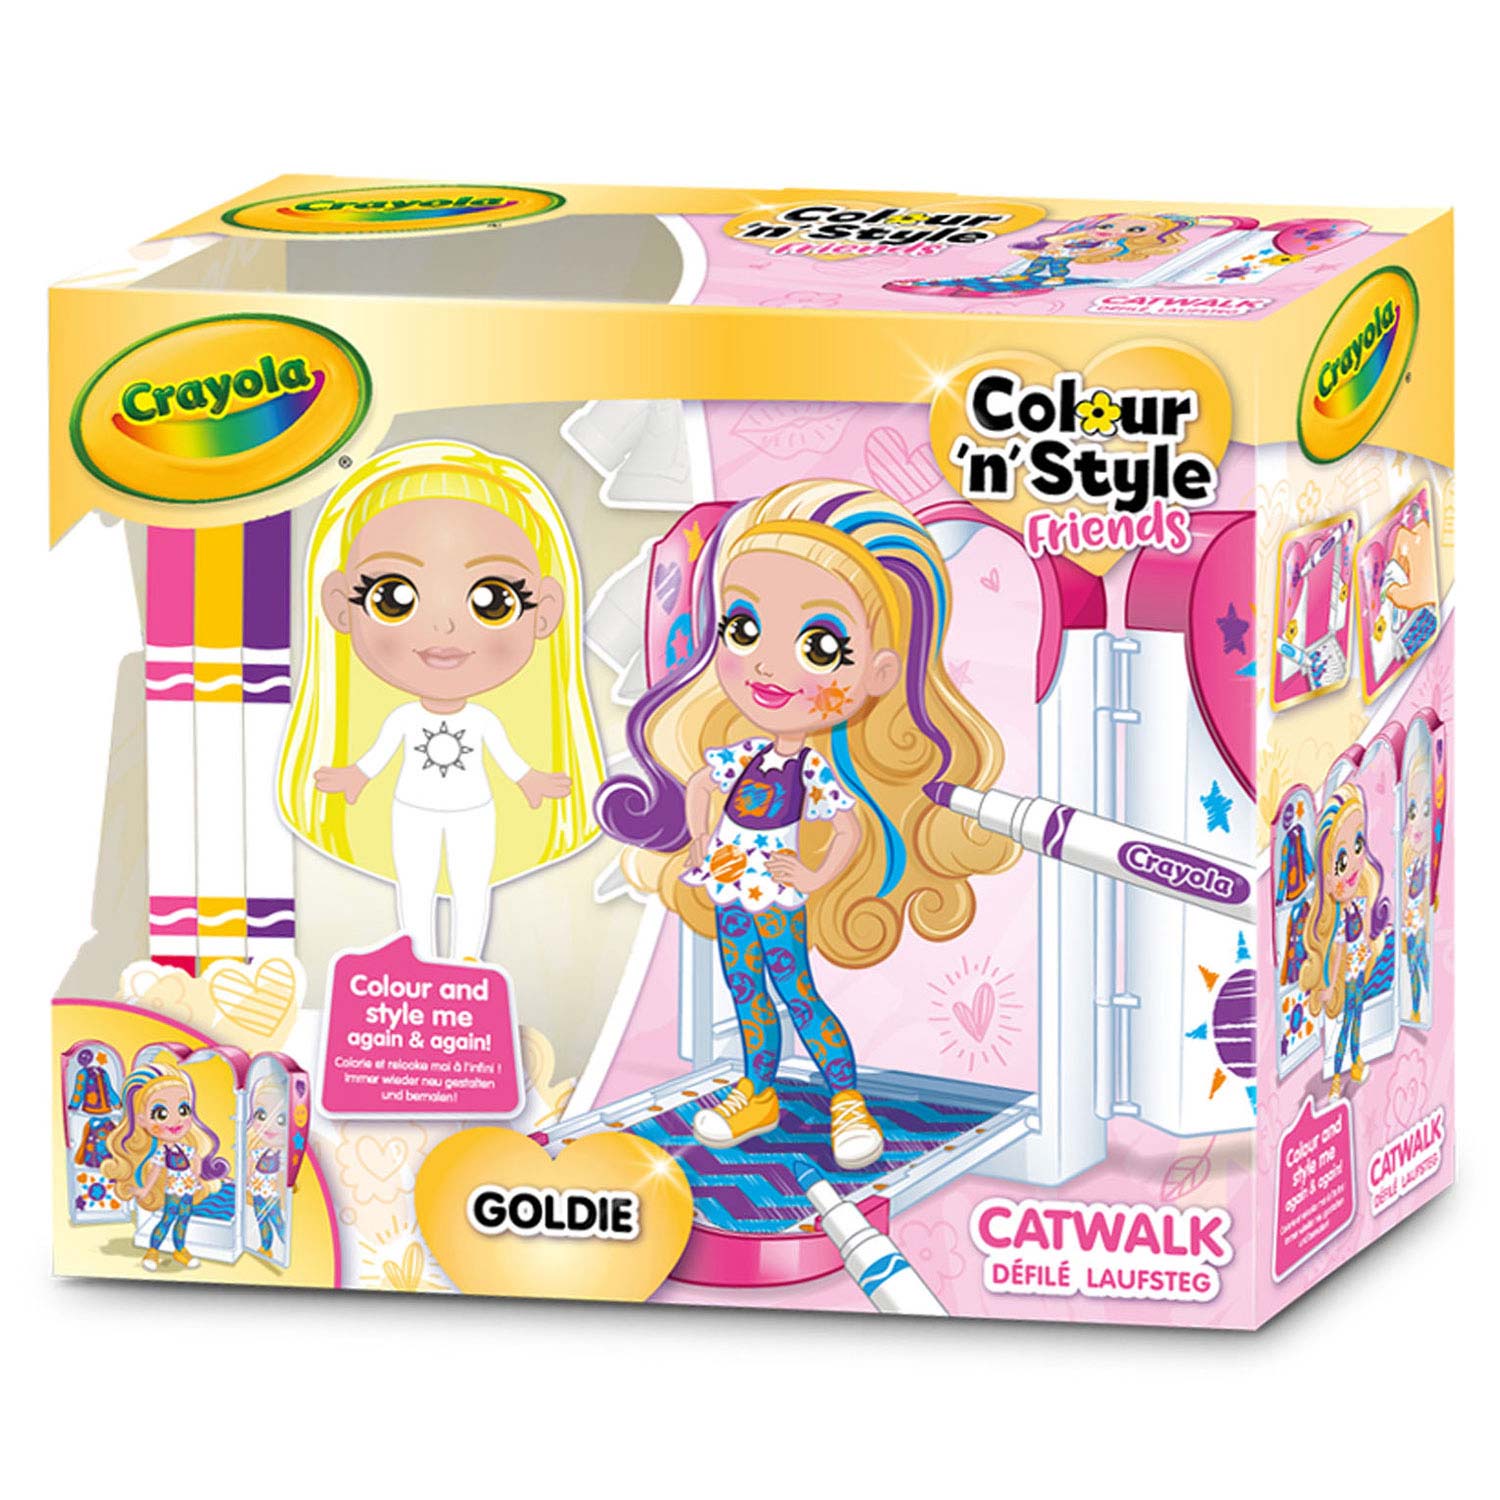 Crayola Colour n Style Friends Catwalk Inkleuren